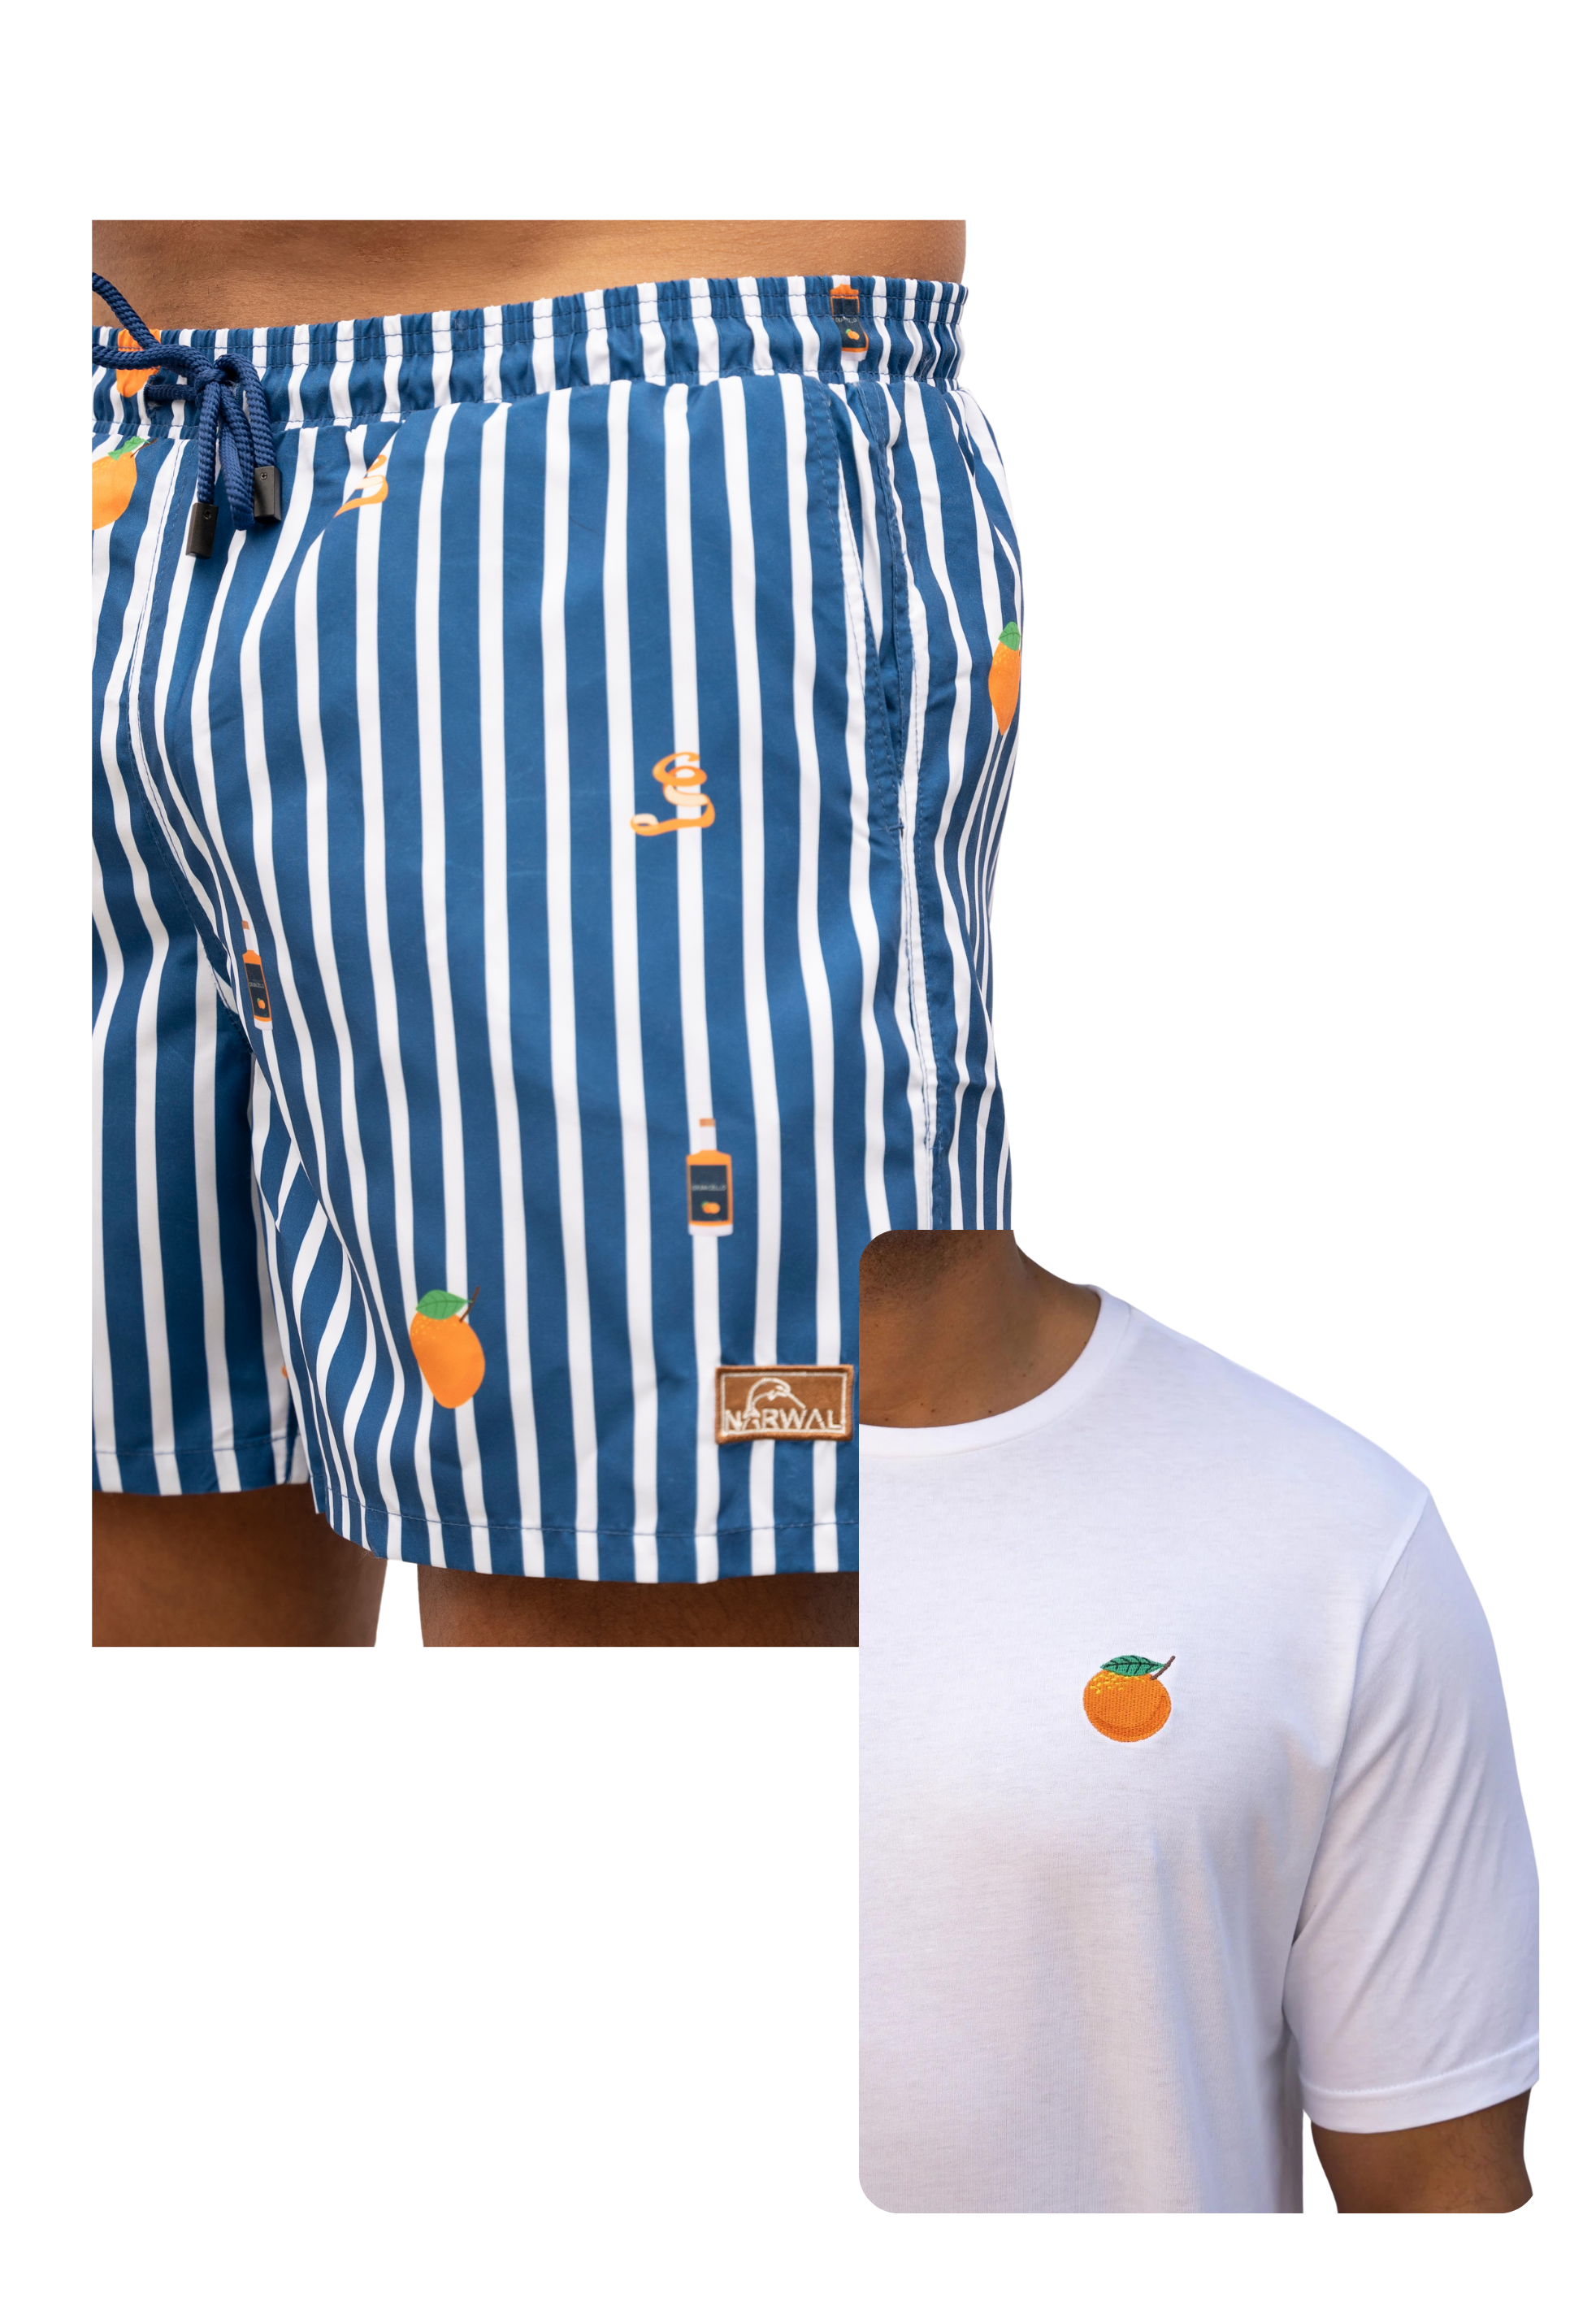 Orancello Swim Trunks & T-shirt Bundle